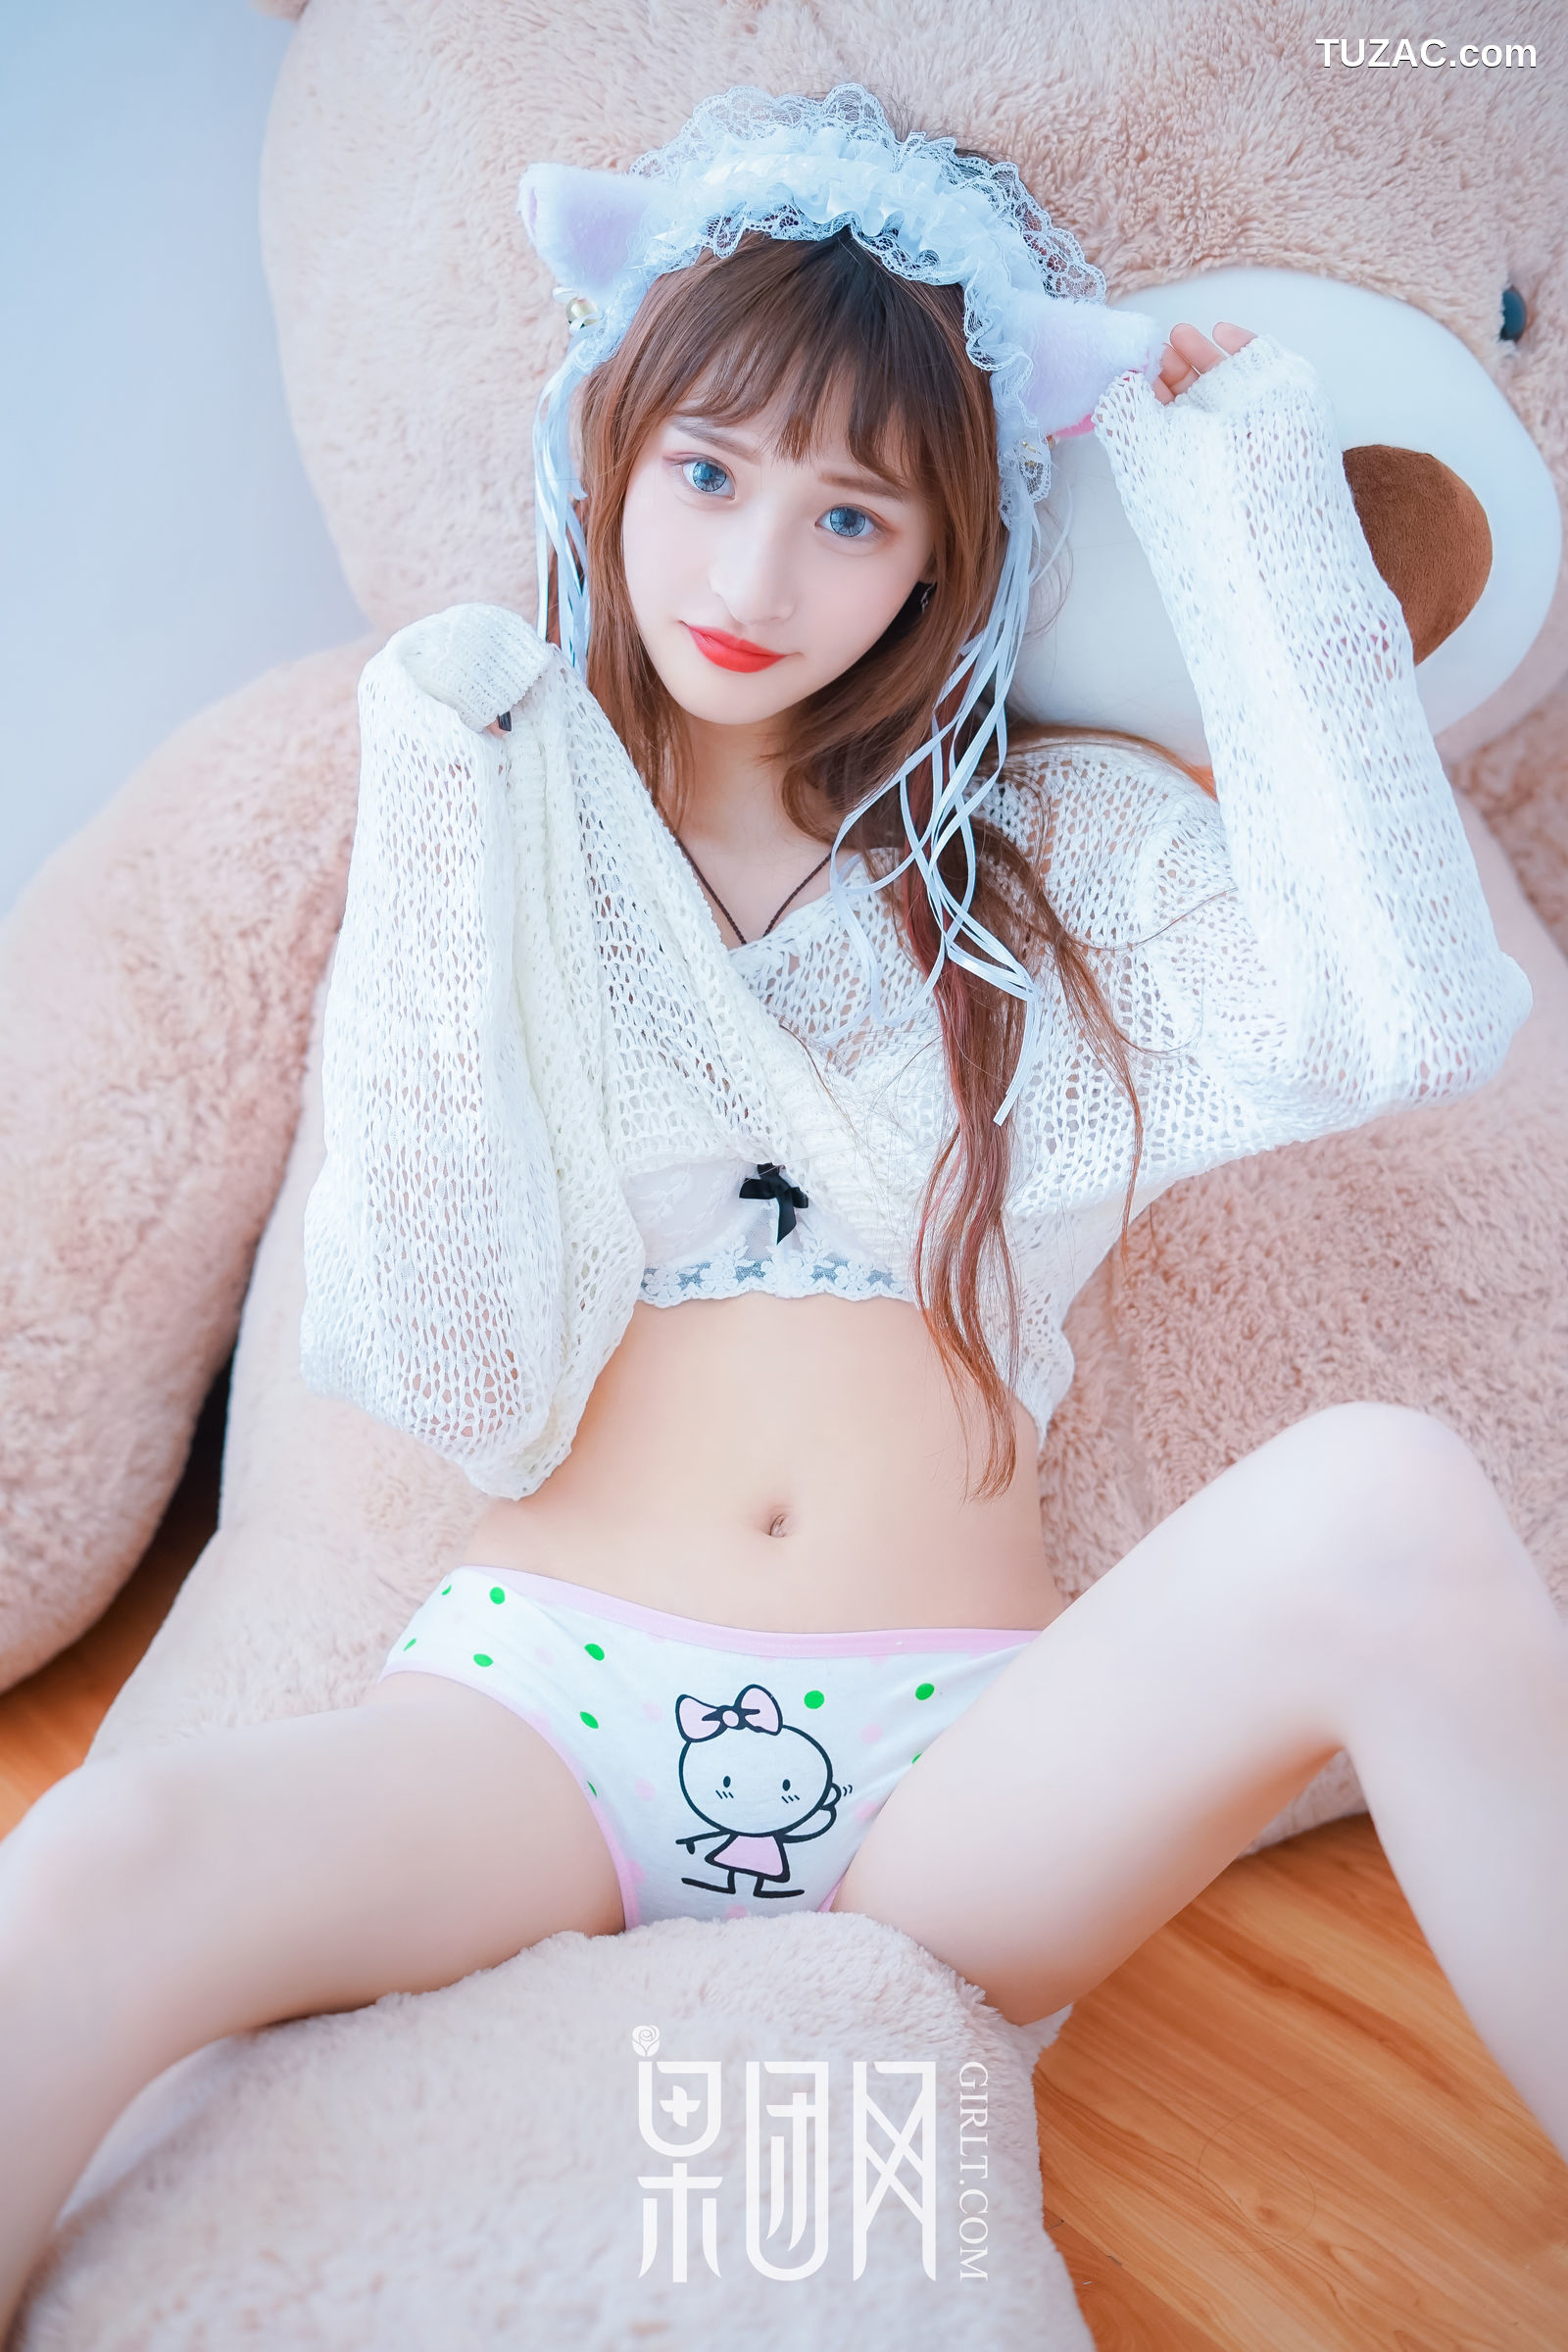 GIRLT果团网-022-Little贝殼-裸露香肩美背大玩cosplay